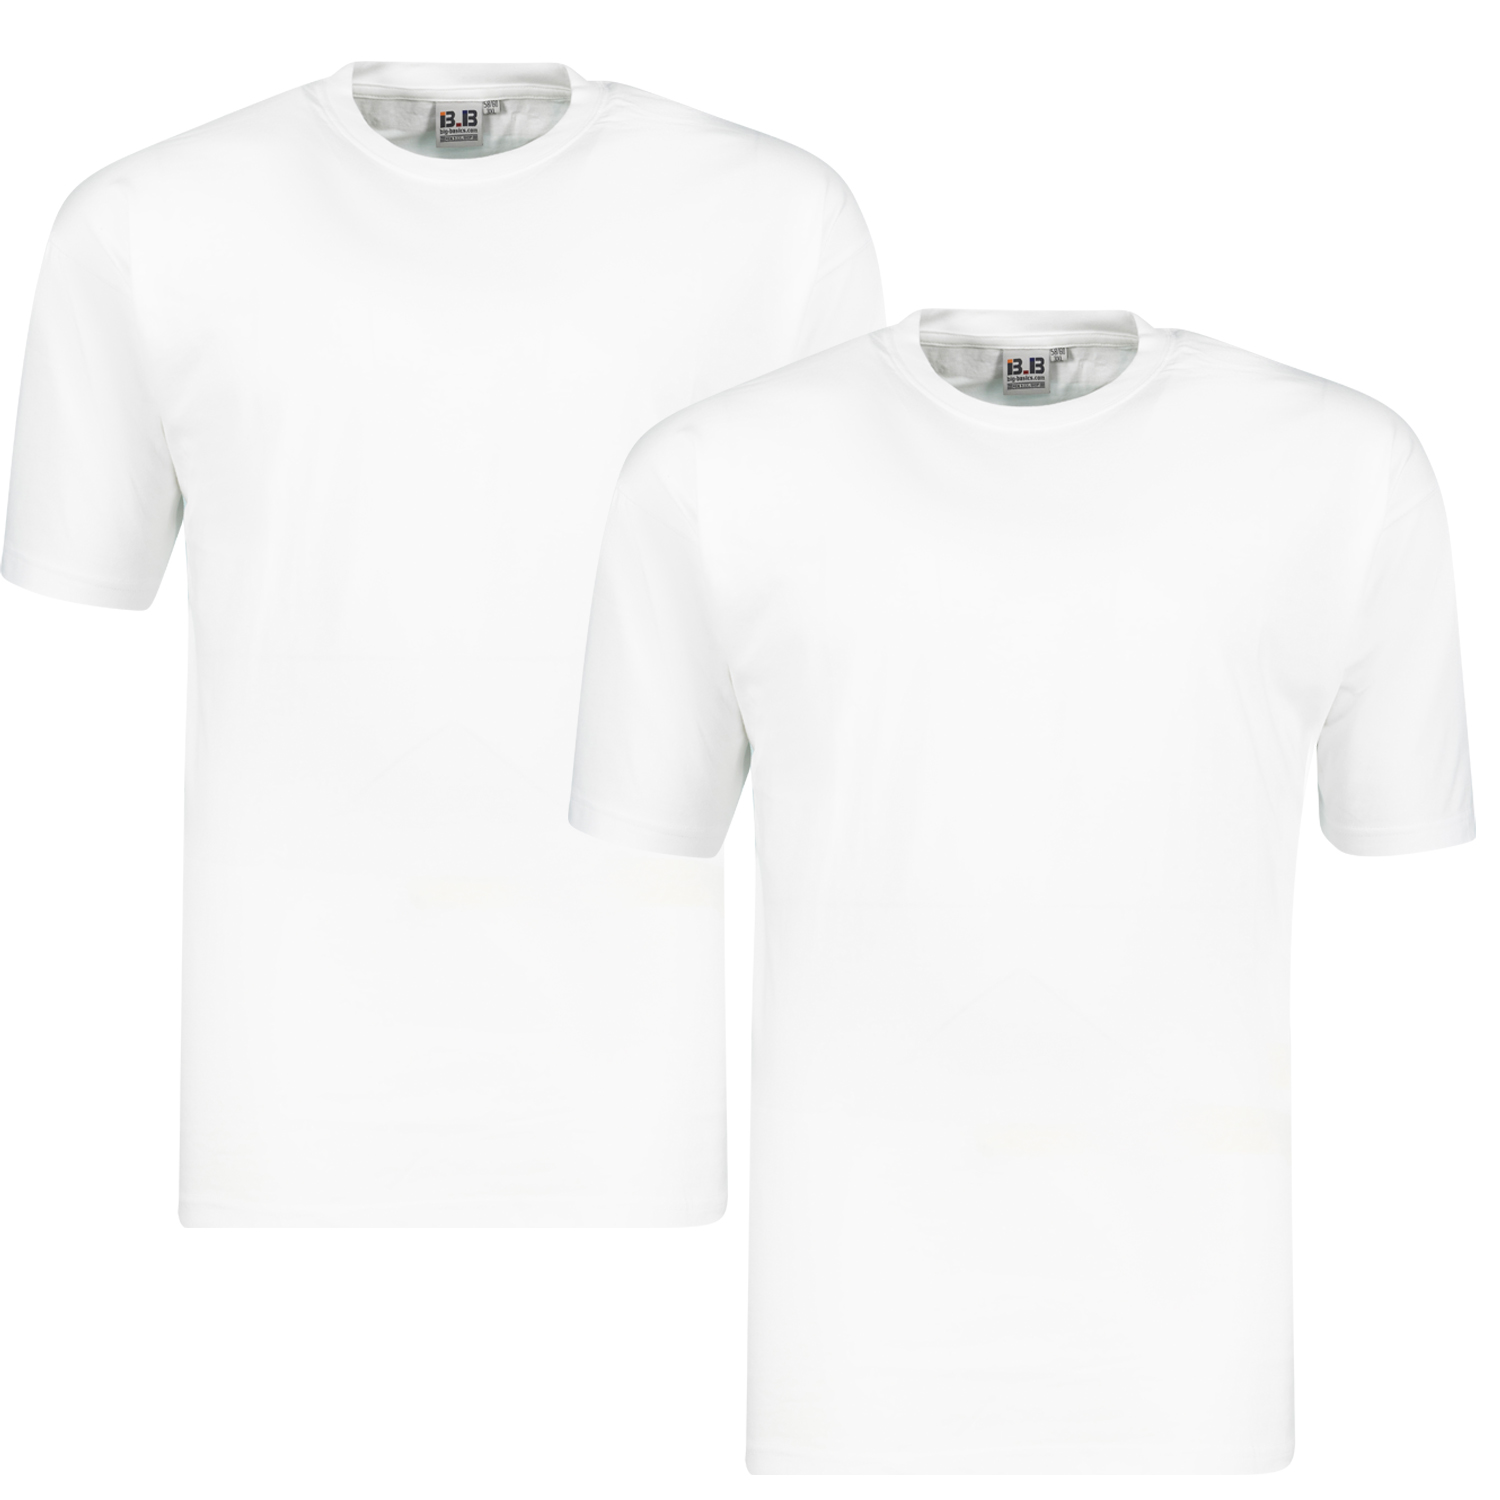 White double pack t-shirt by BigBasics up to kingsize 8XL